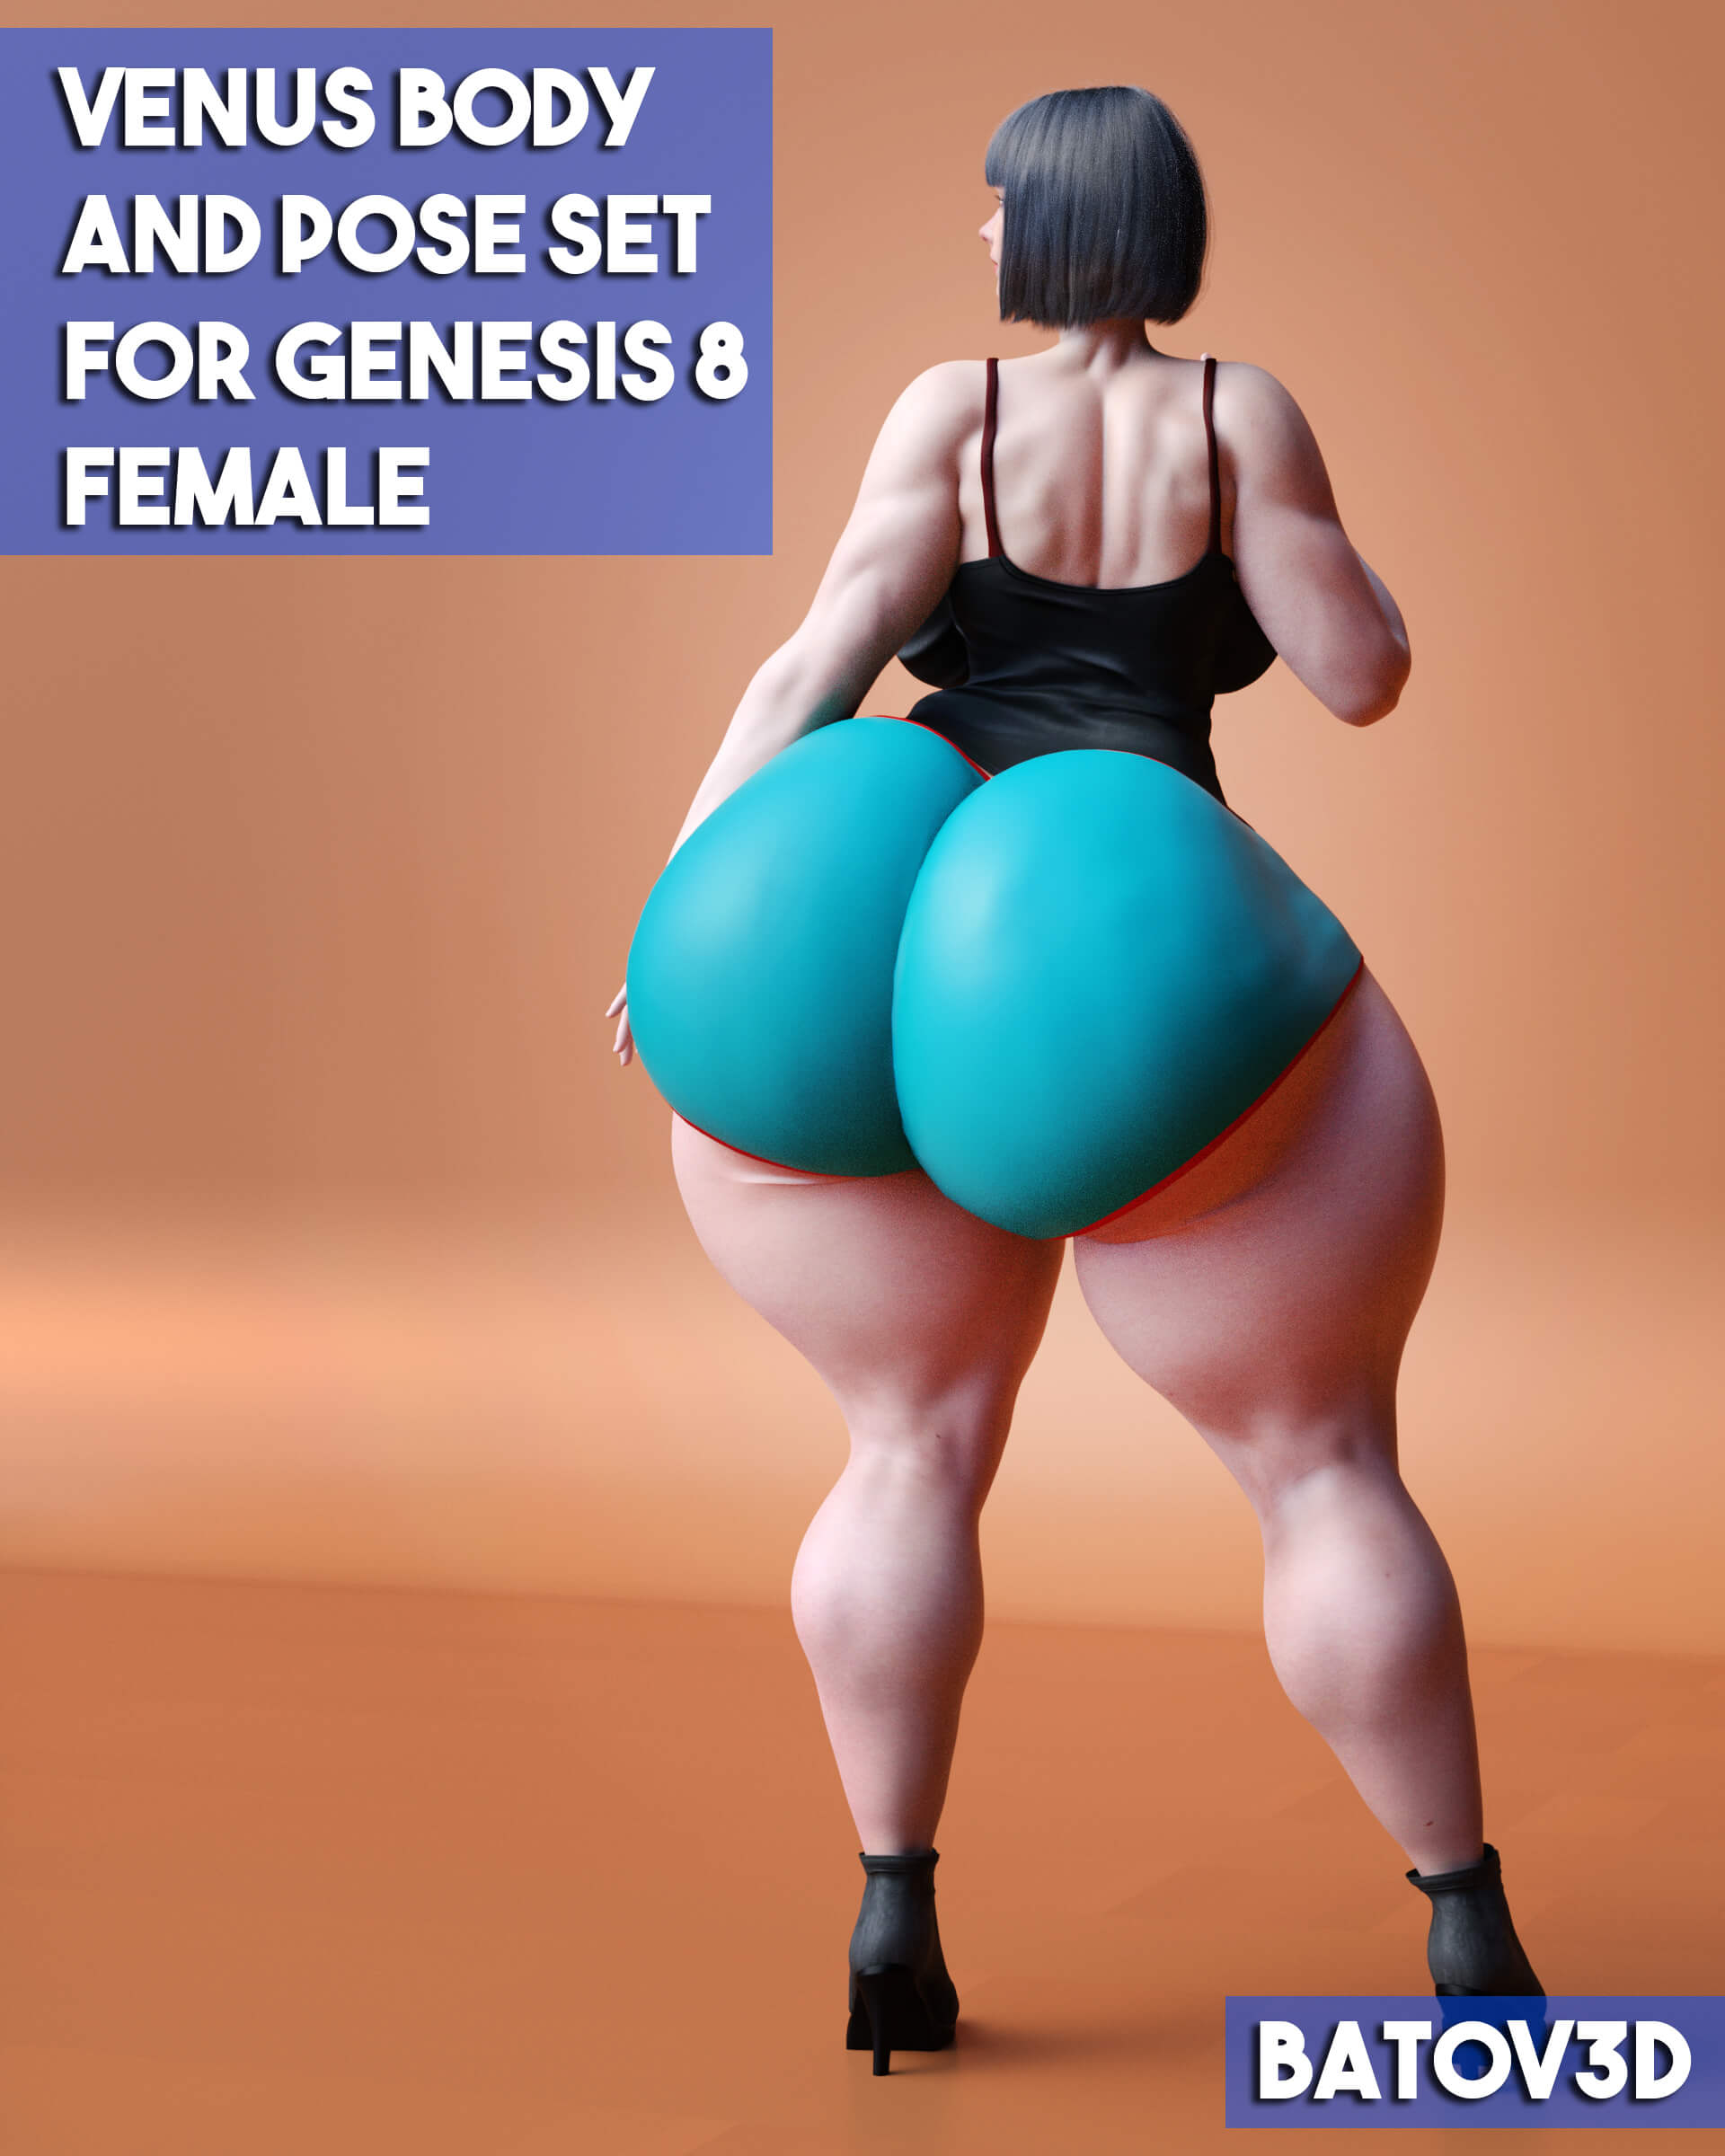 venus body for genesis 8 female 02 KTWp0kHL